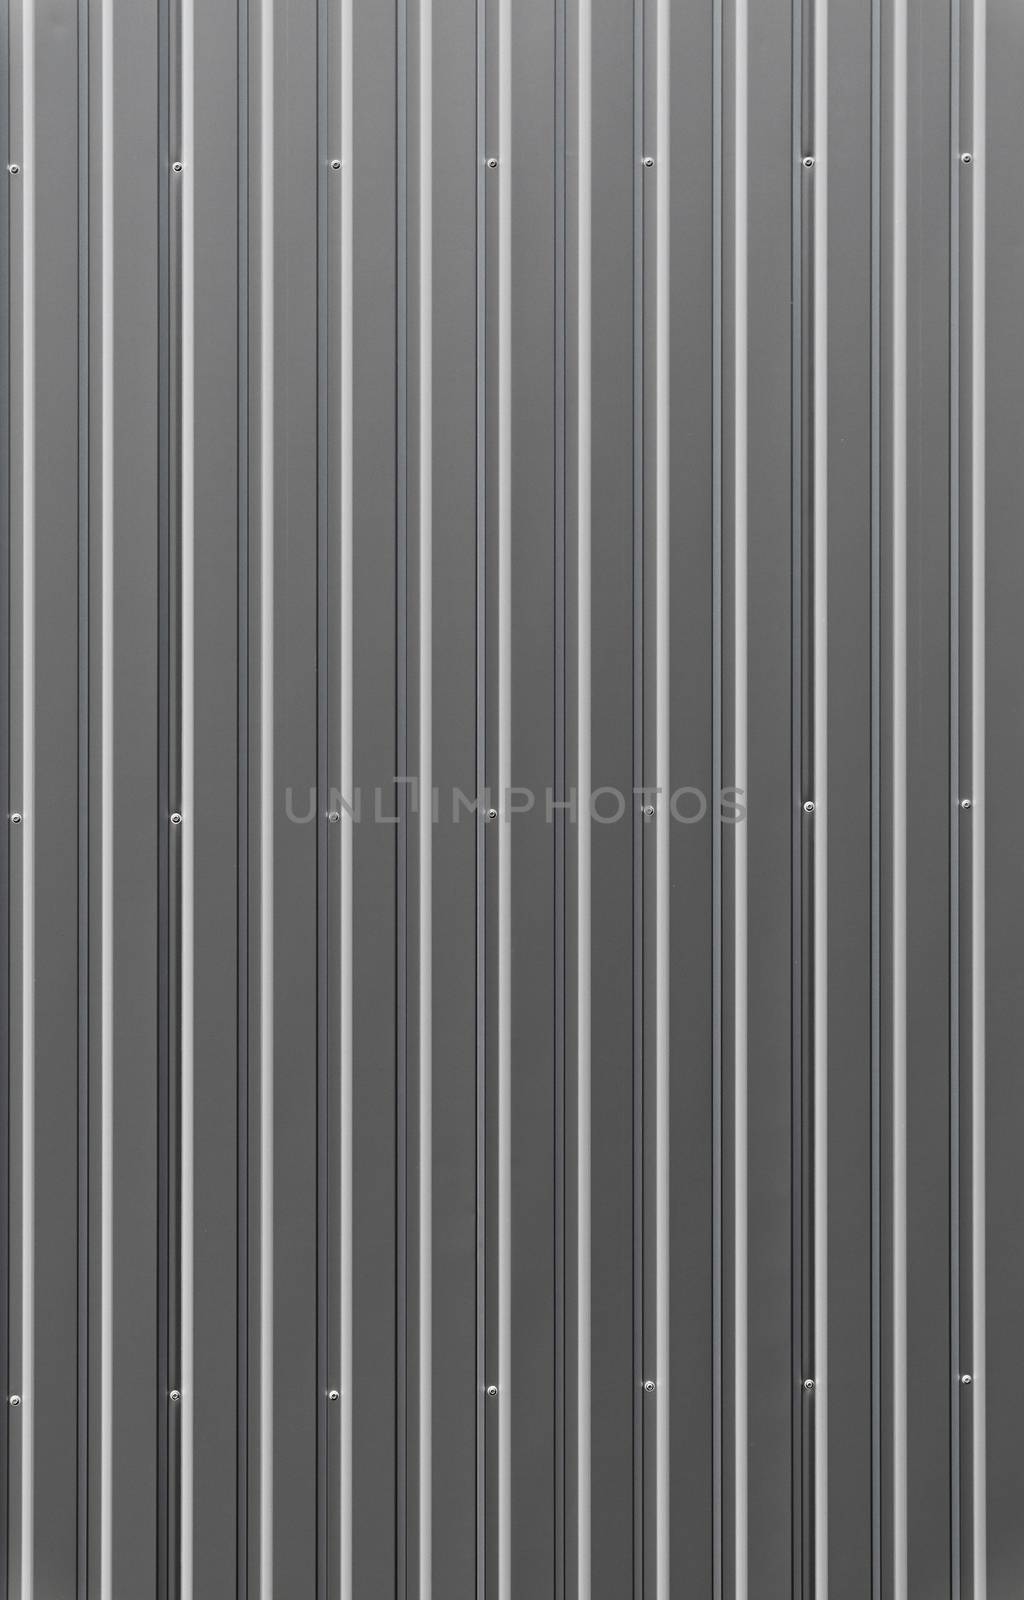 Aluminum corrugated metal wall by BreakingTheWalls